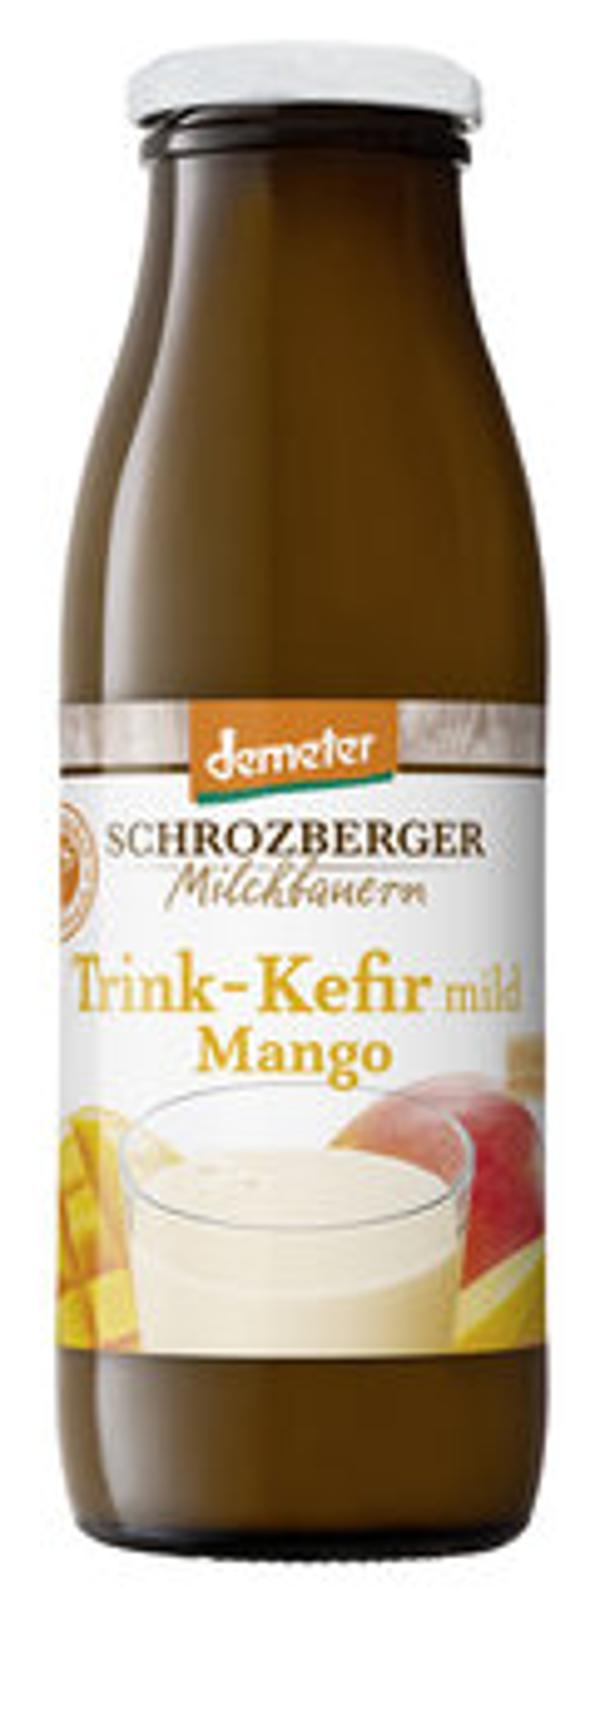 Produktfoto zu Trink-Kefir Mango 500g